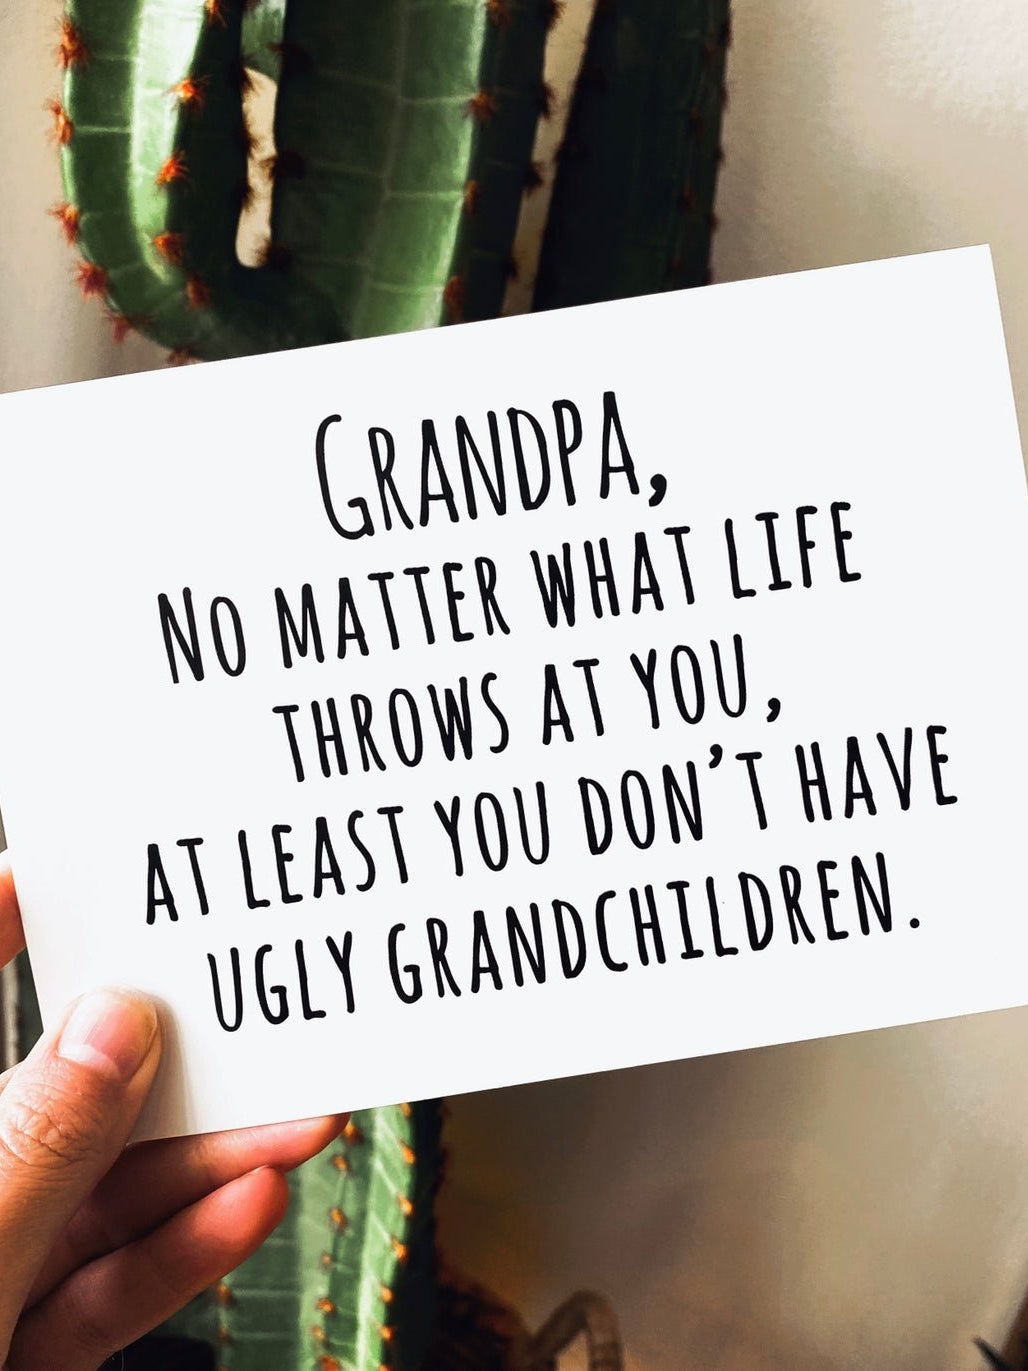 Grandpa At least You Didn't Have Ugly Children Greeting Card - UntamedEgo LLC.